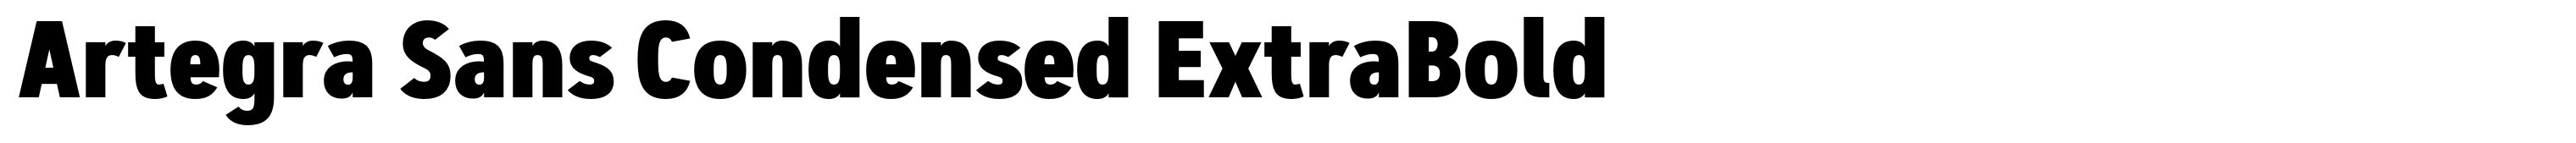 Artegra Sans Condensed ExtraBold